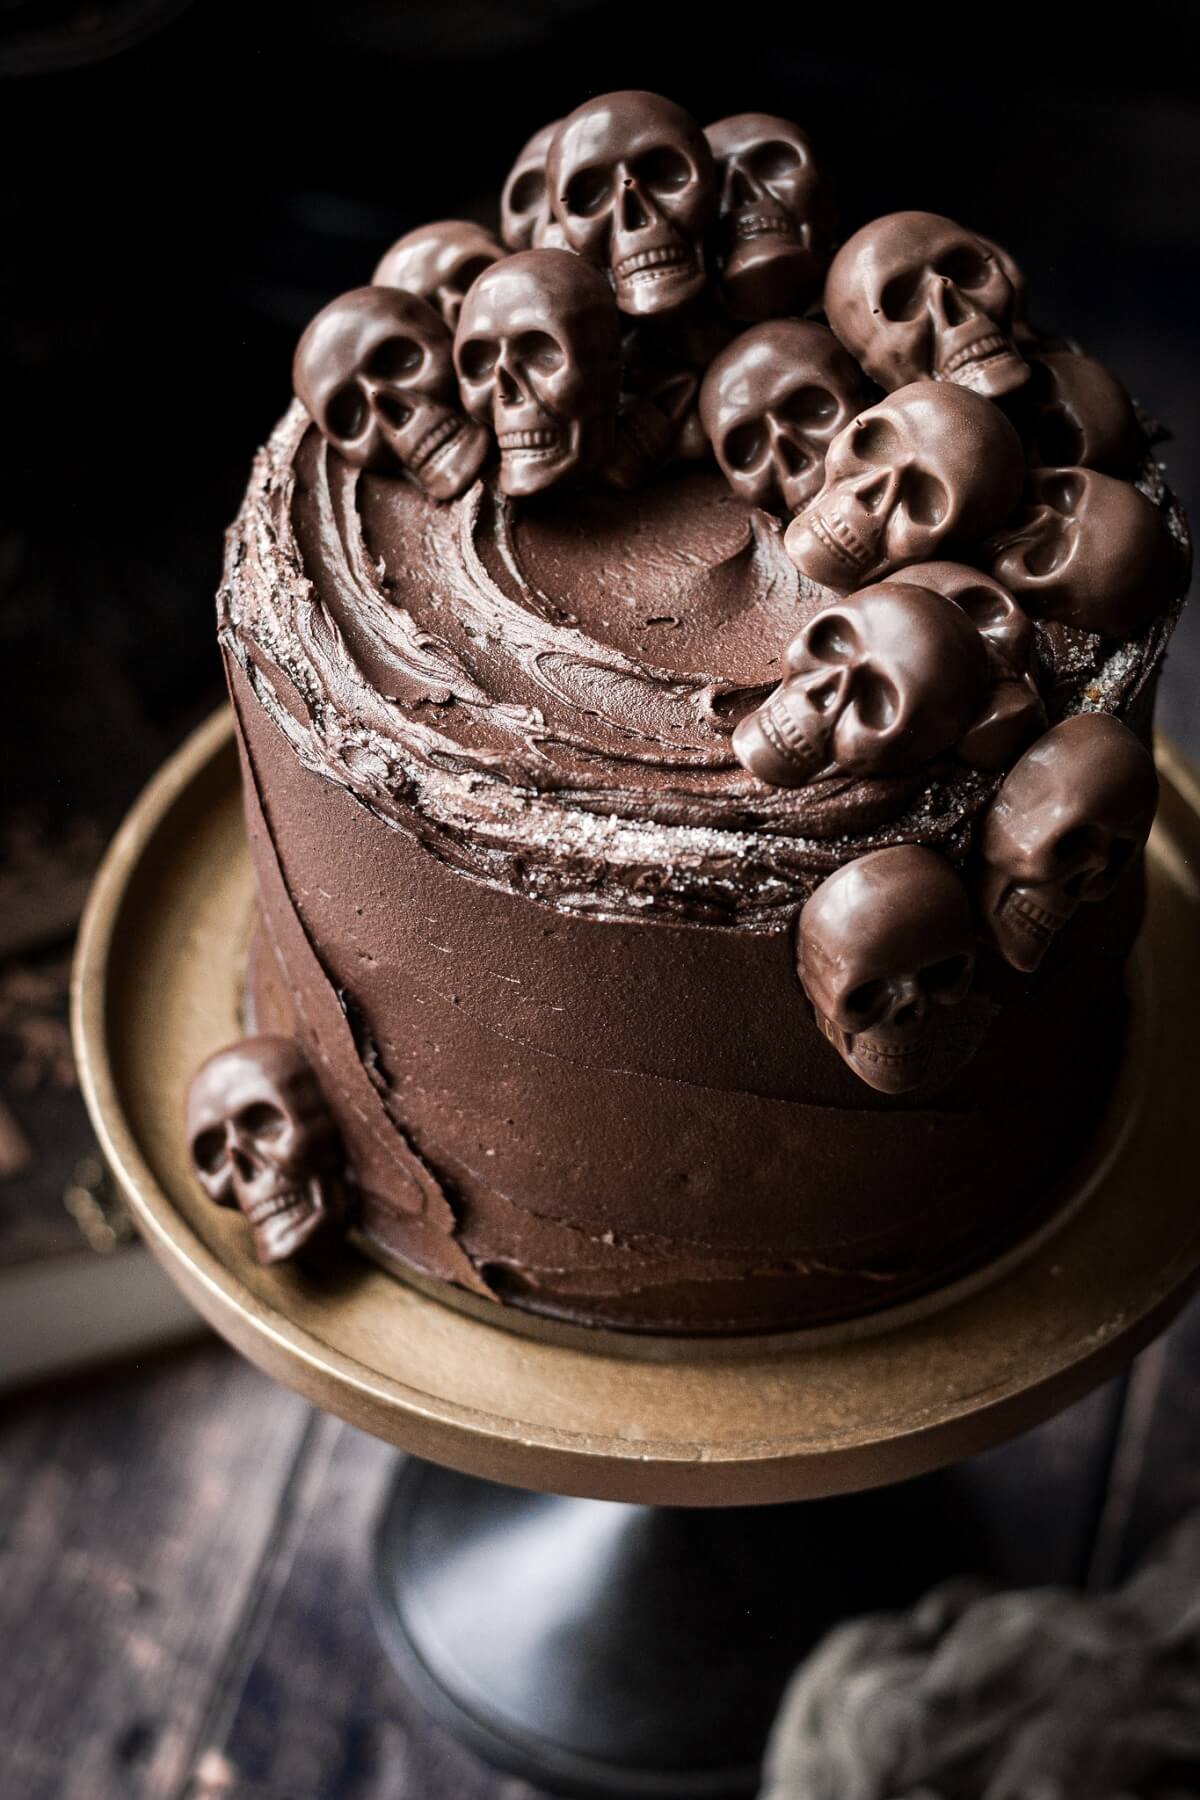 Mini chocolate skulls piled on top of a Halloween cake.